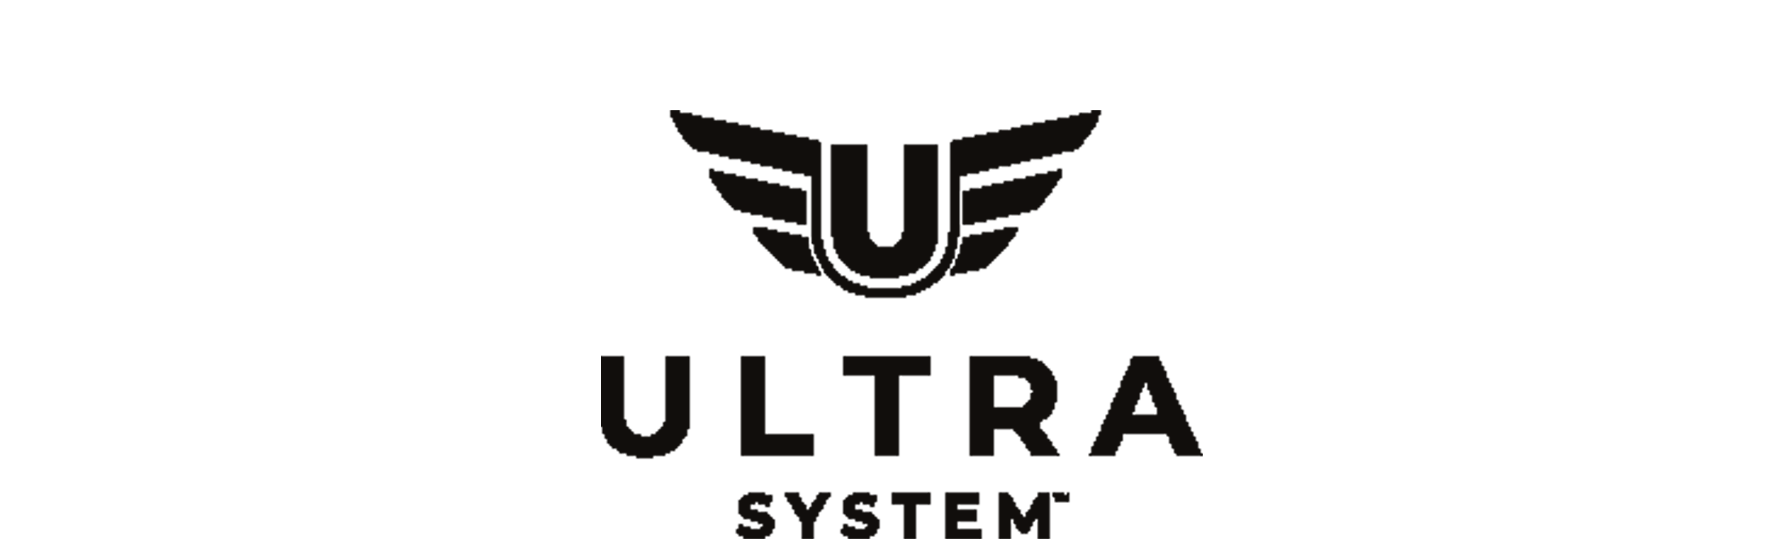 UltraSystem